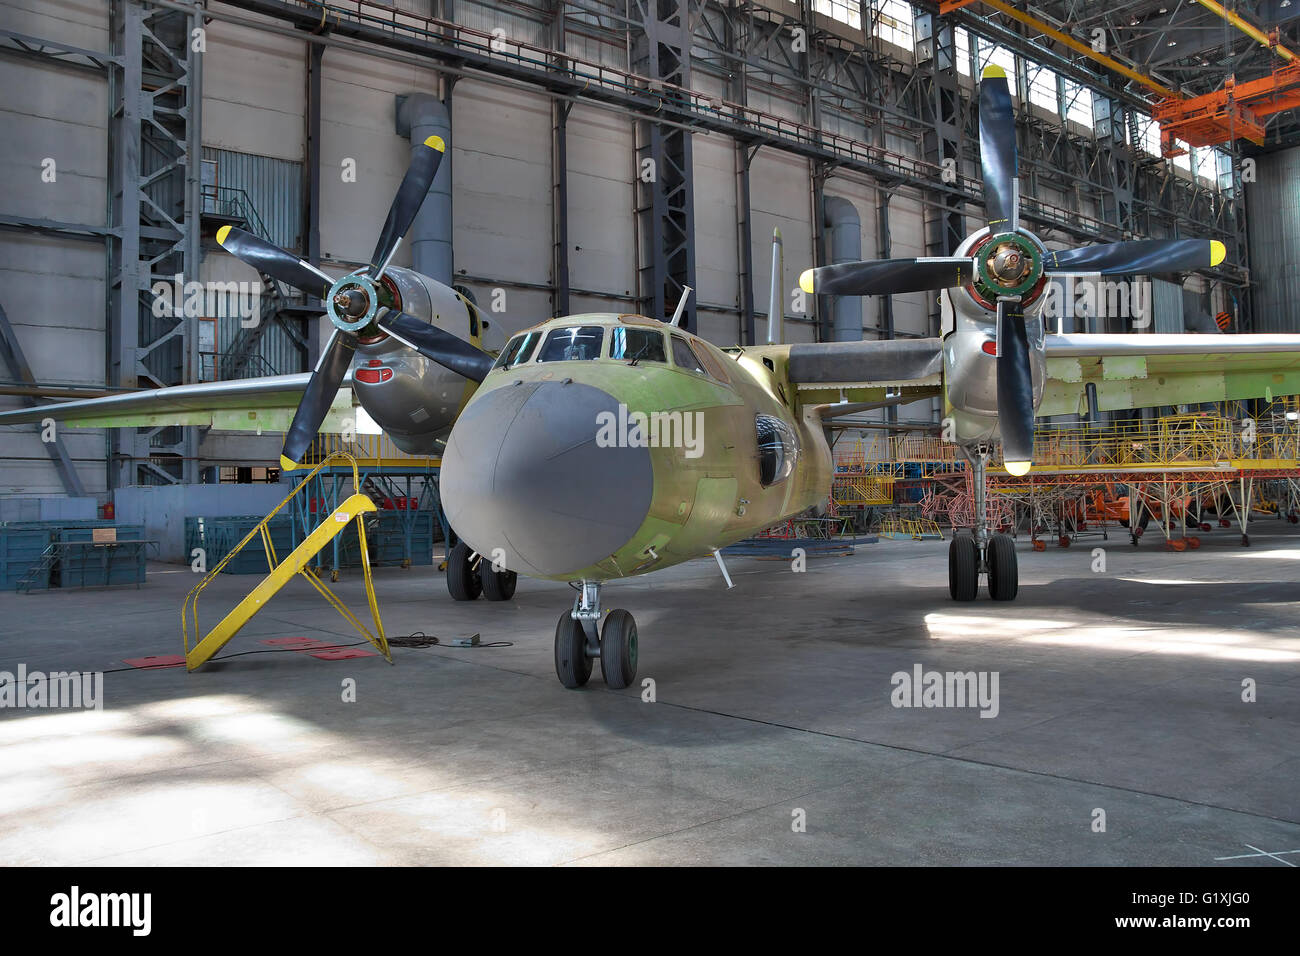 Kiev, Ukraine - August 3, 2011: Antonov An-32 cargo plane being assembled at the aircraft manufacturing hangar Stock Photo